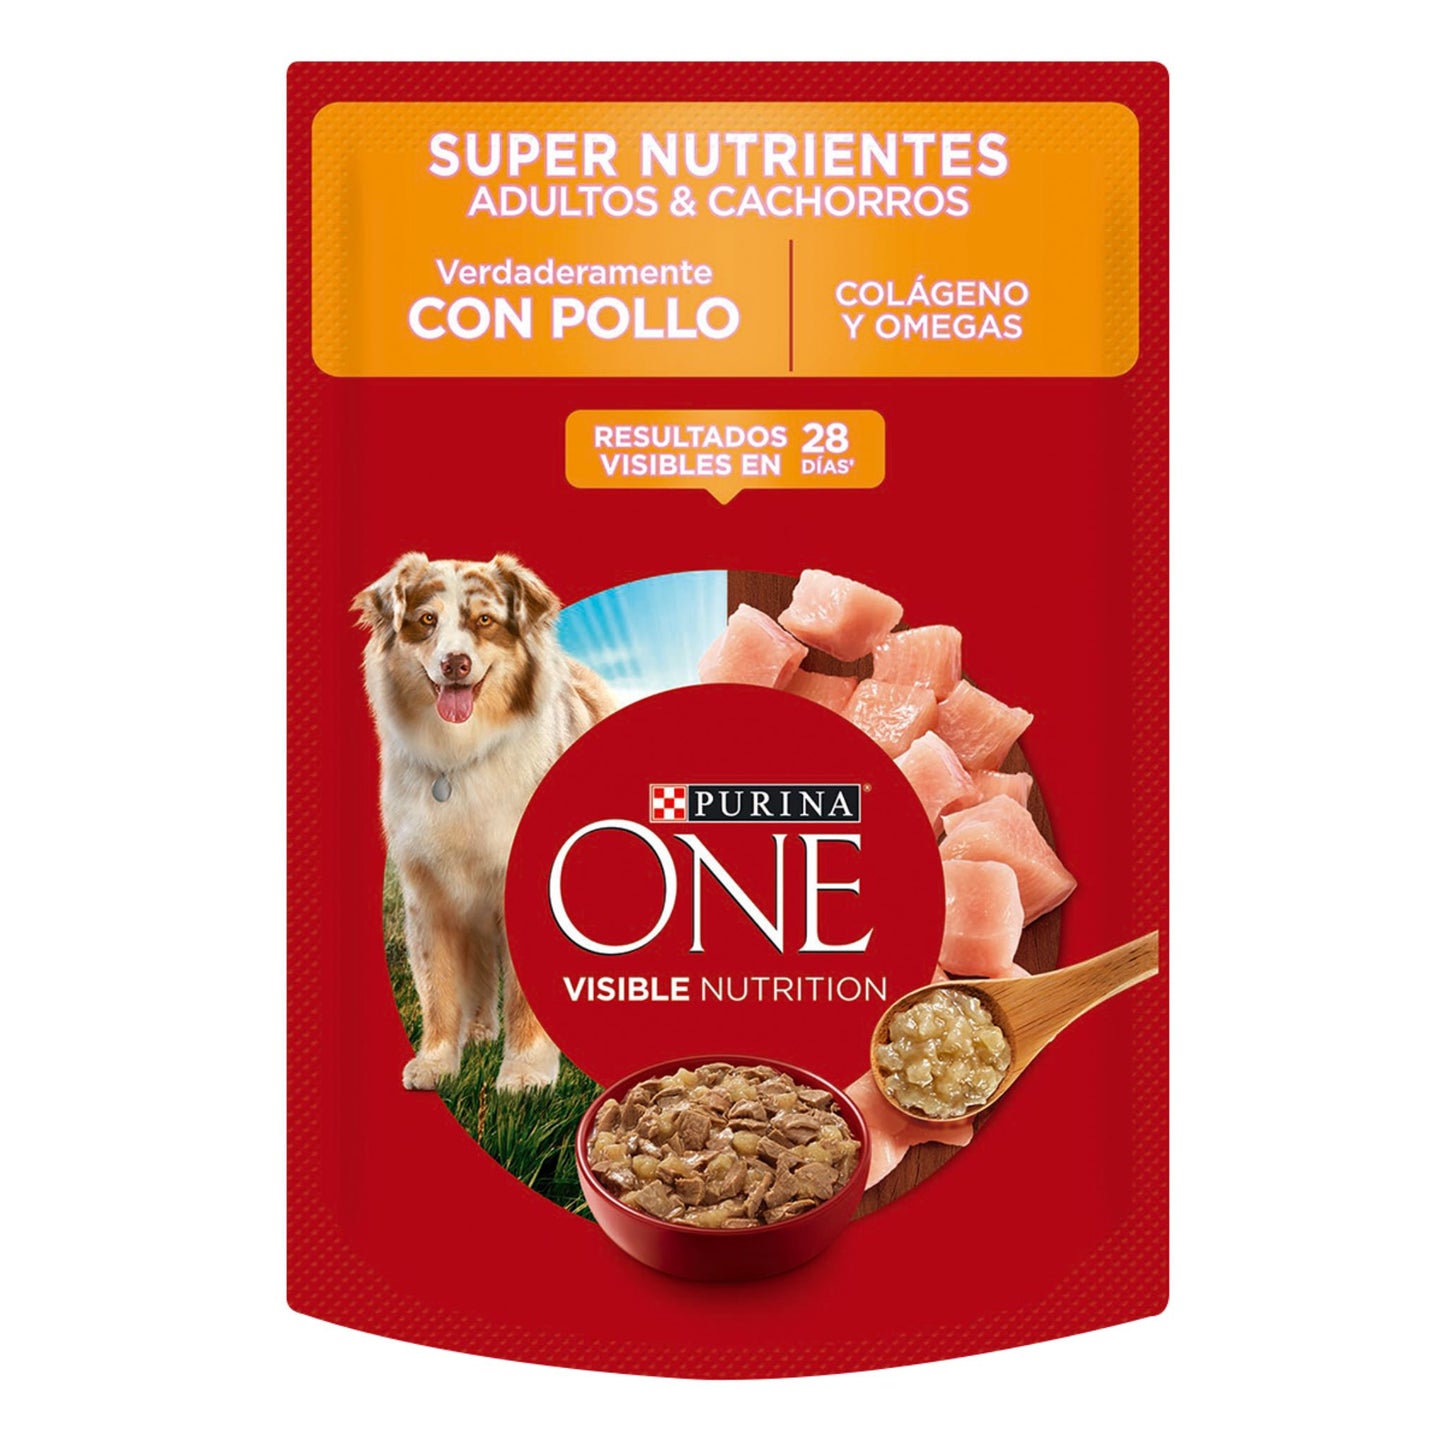 Purina ONE Perro Super Nutrientes - Adulto y Cachorro 85 g